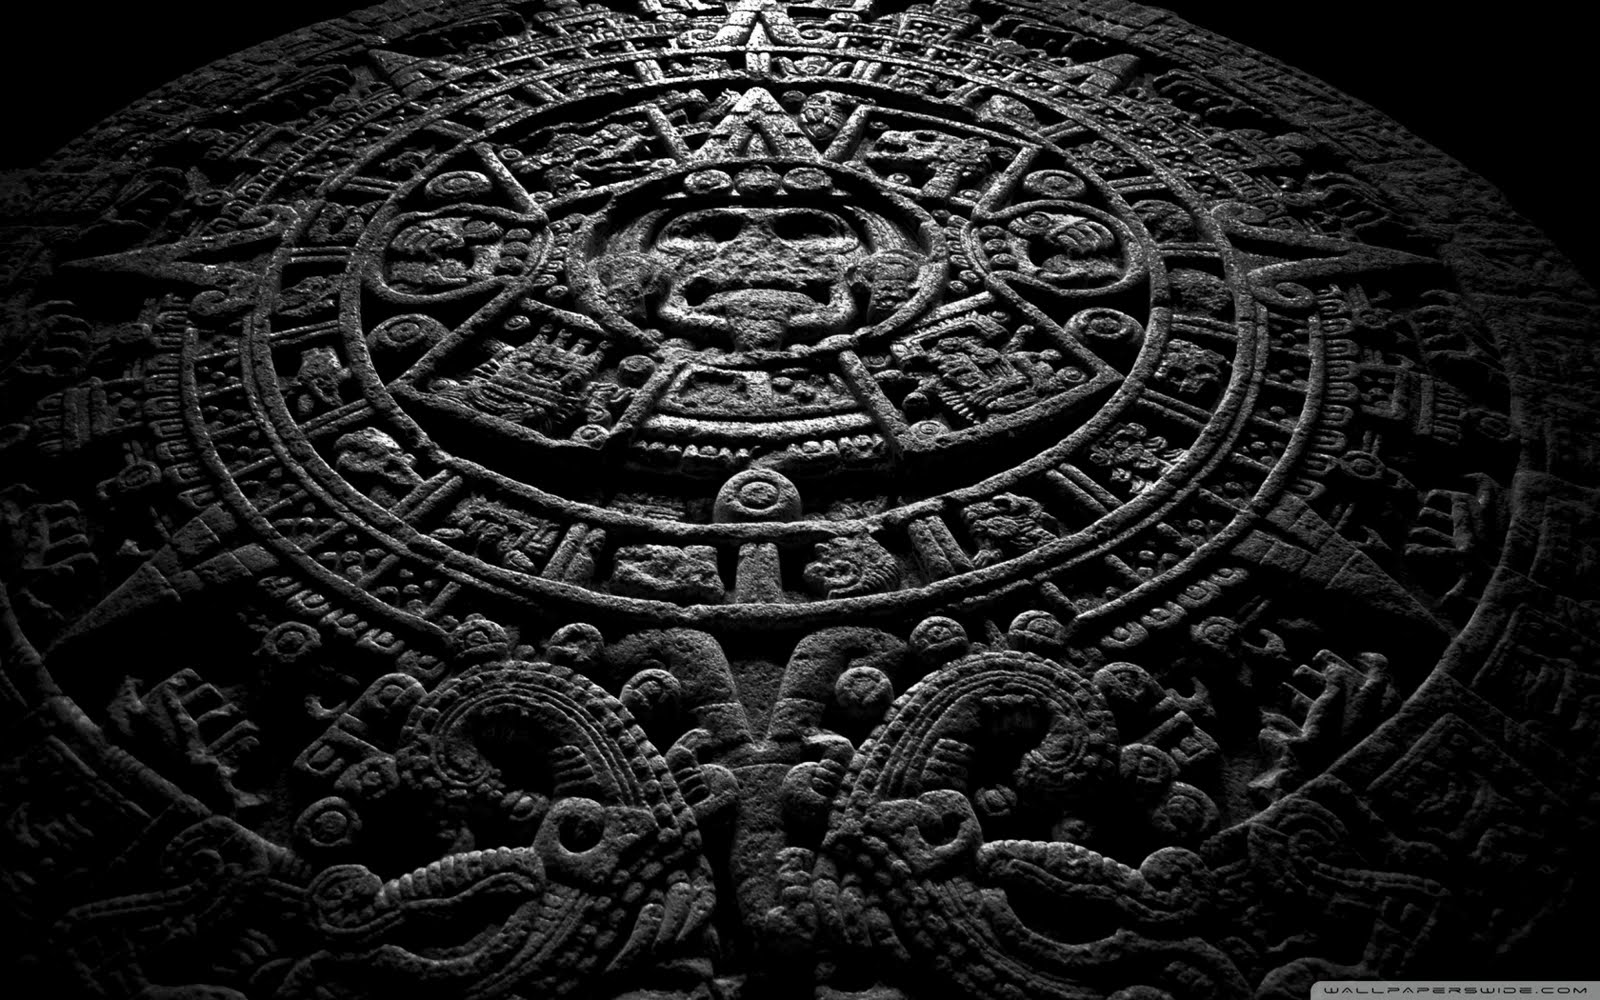 Mayan Calendar 2012 Predictions That Came True